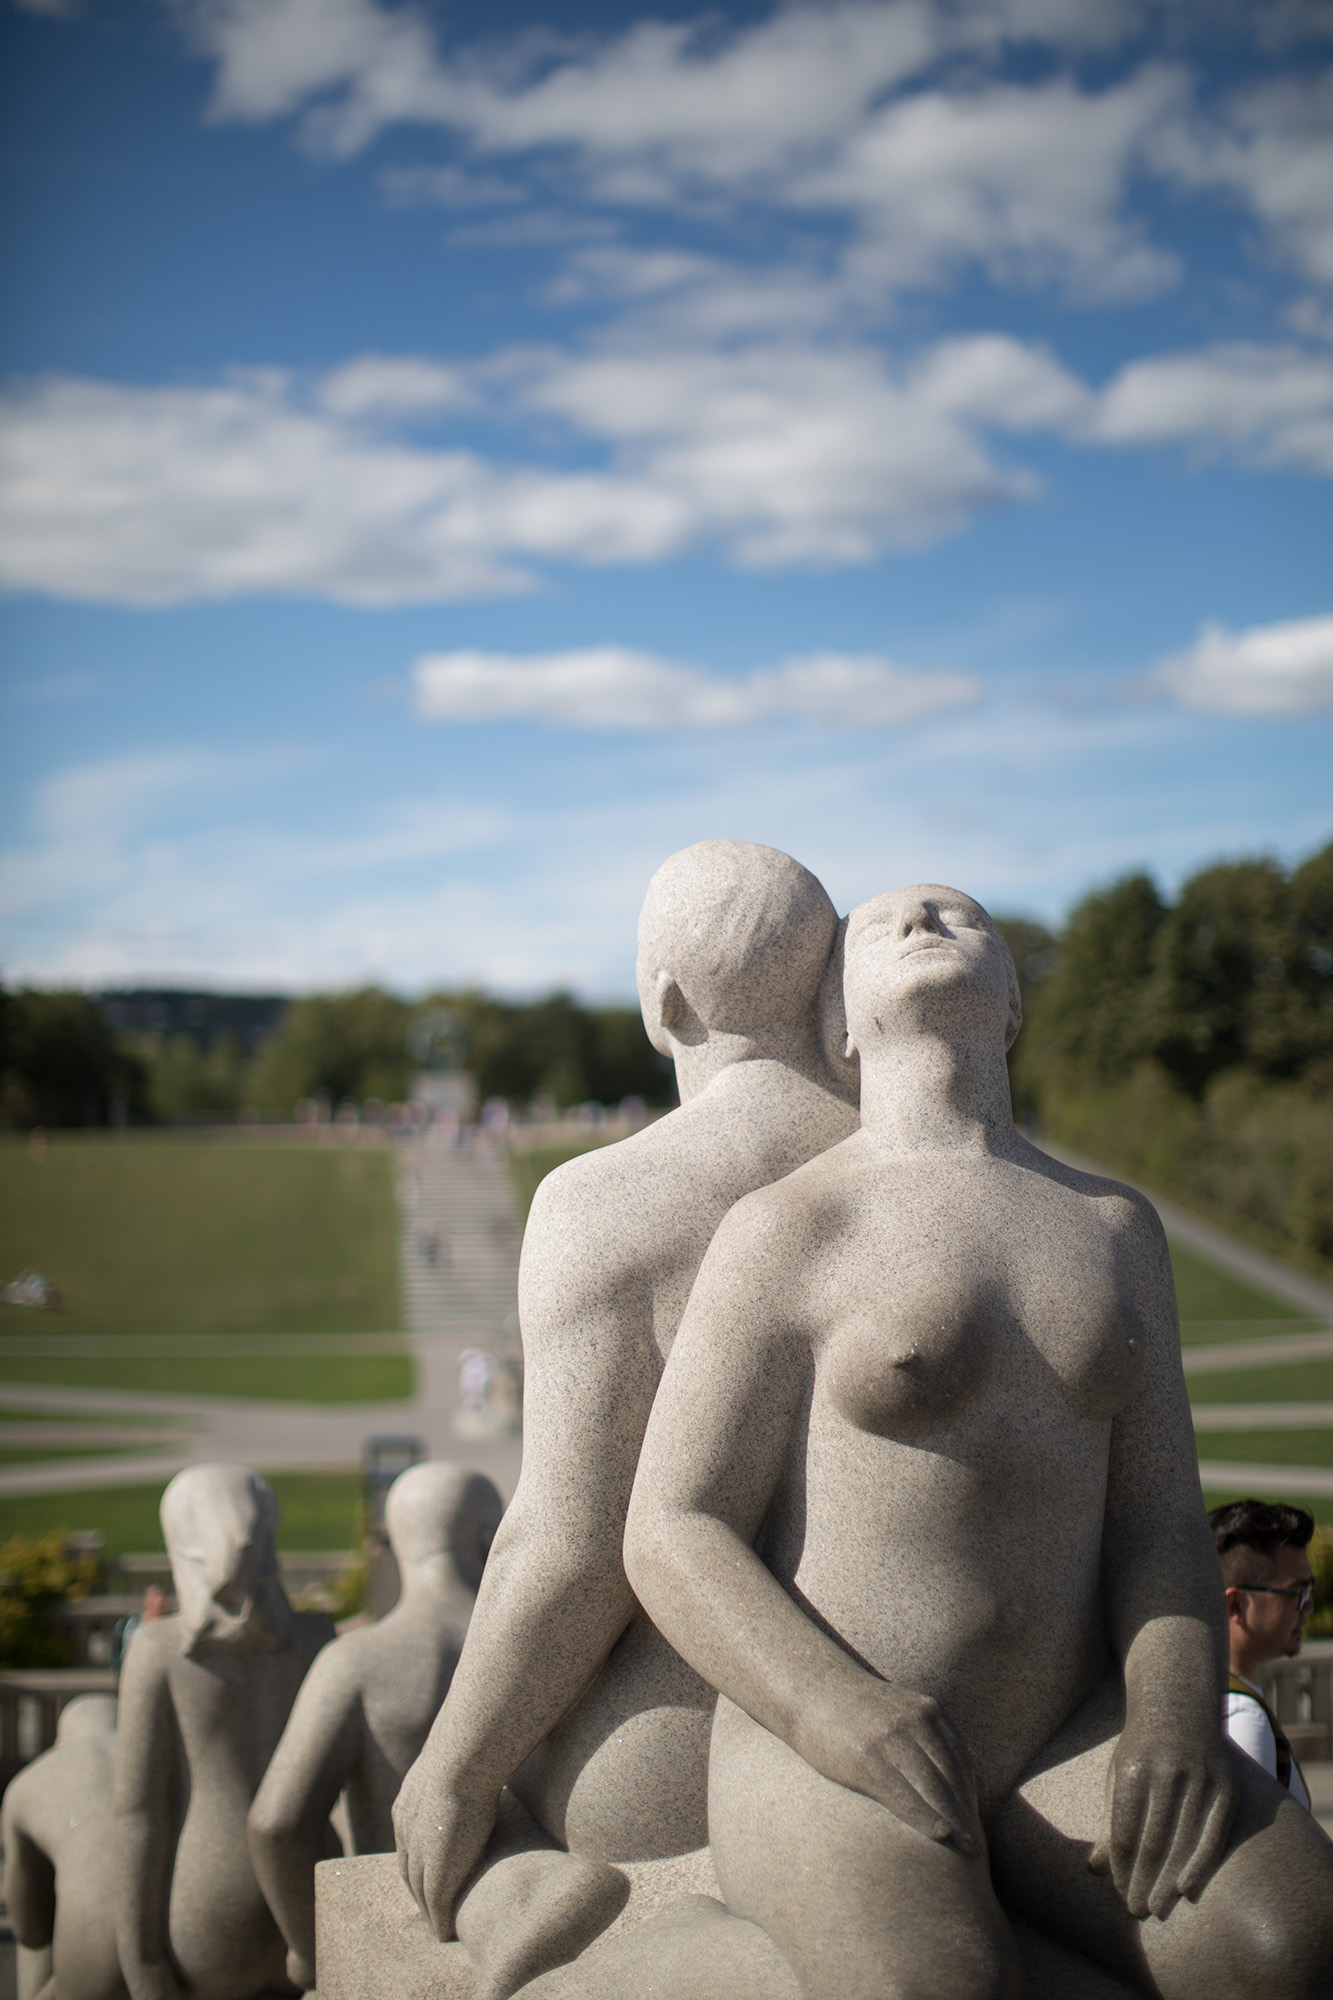 Vigeland Sculpture Park, Oslo - Instagrammer's guide to Oslo - 91 Magazine